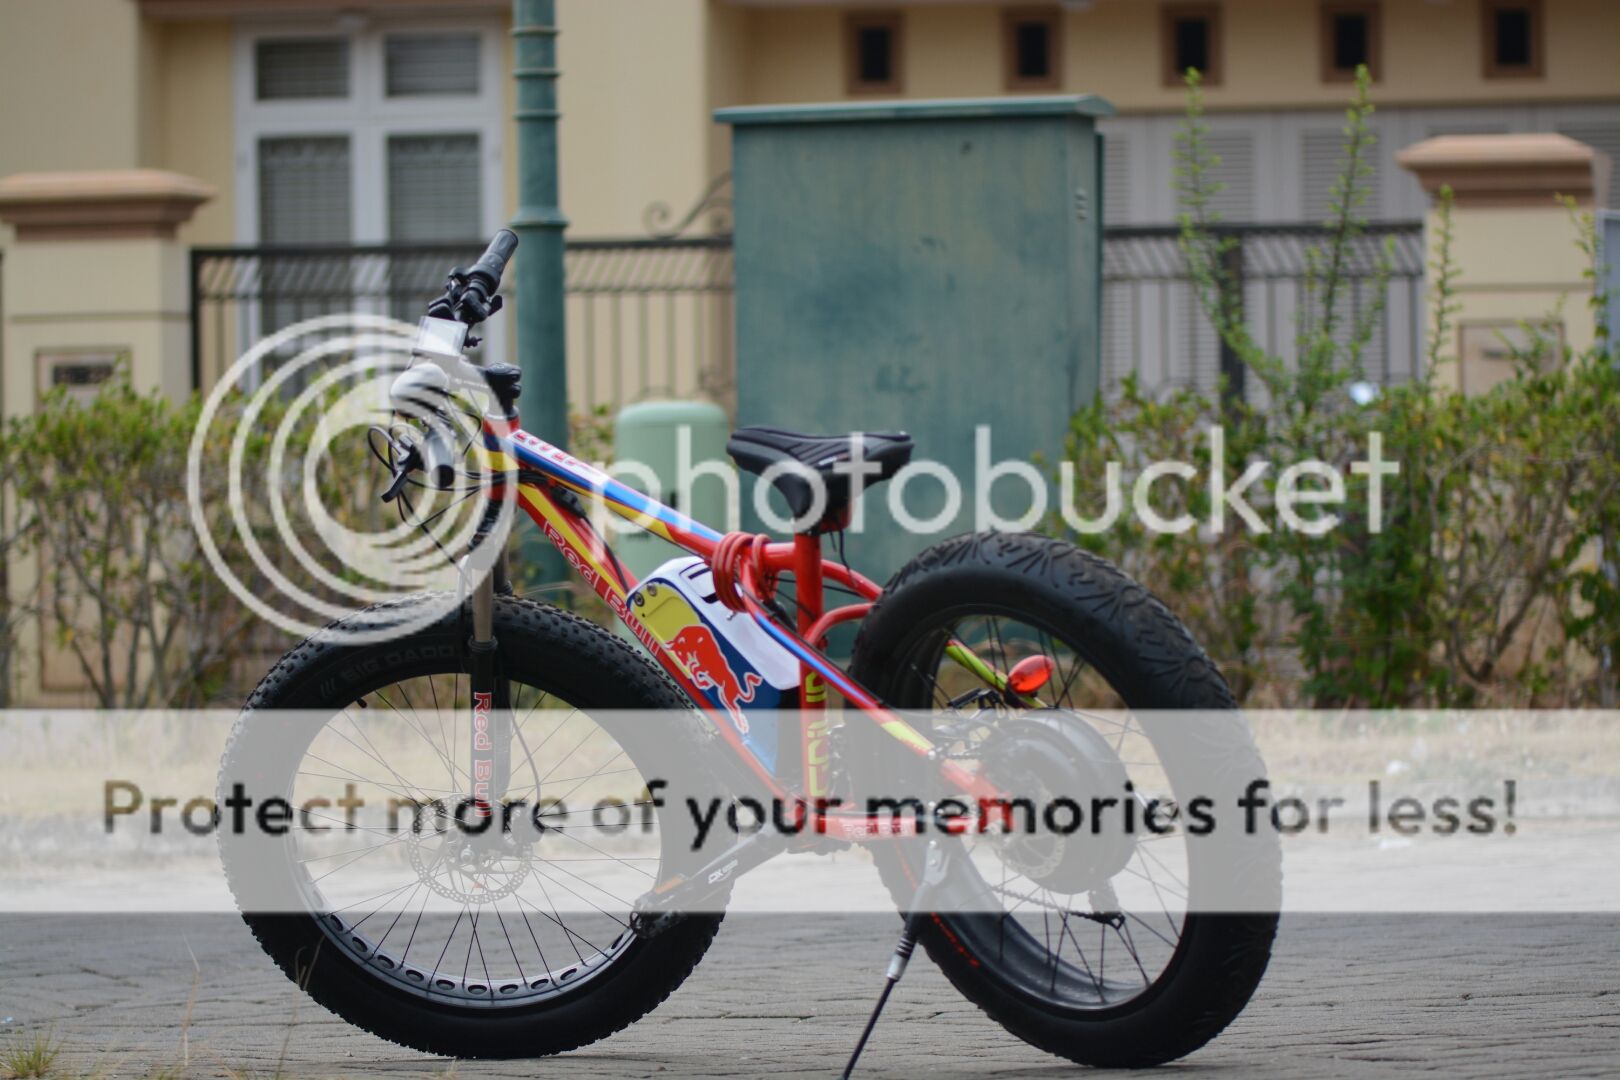 serba-serbi-electric-bike-show-your-e-bike